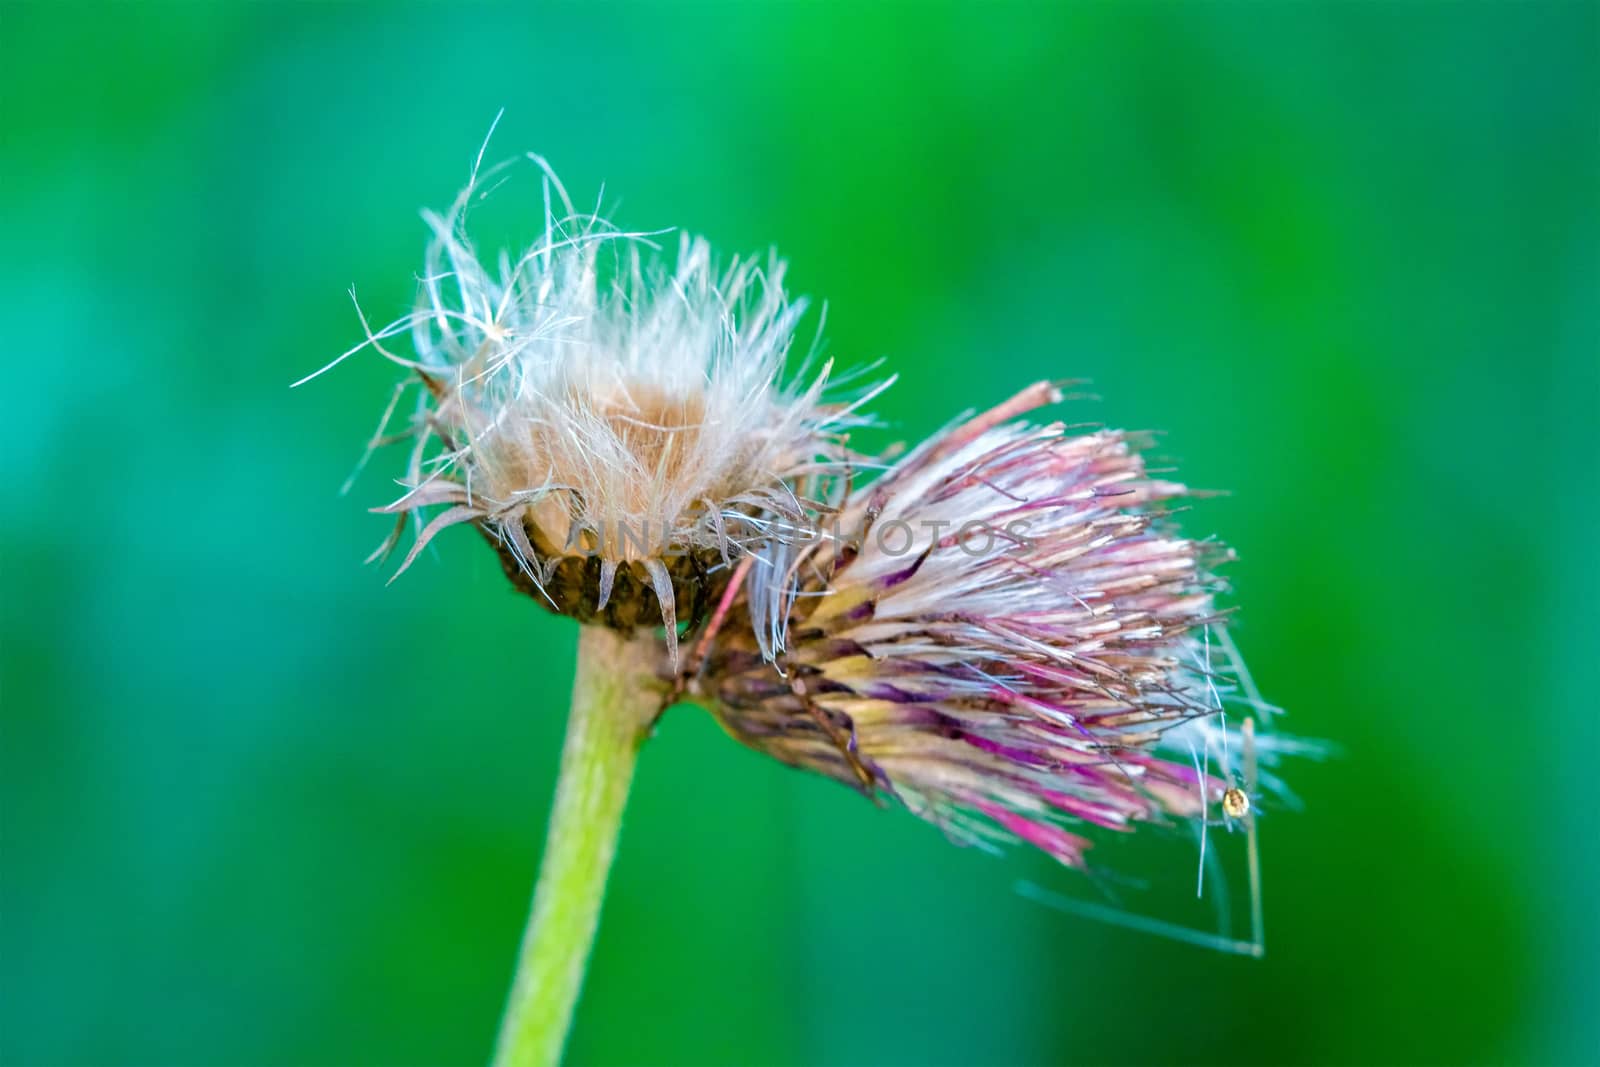 Flower Thistle by neryx